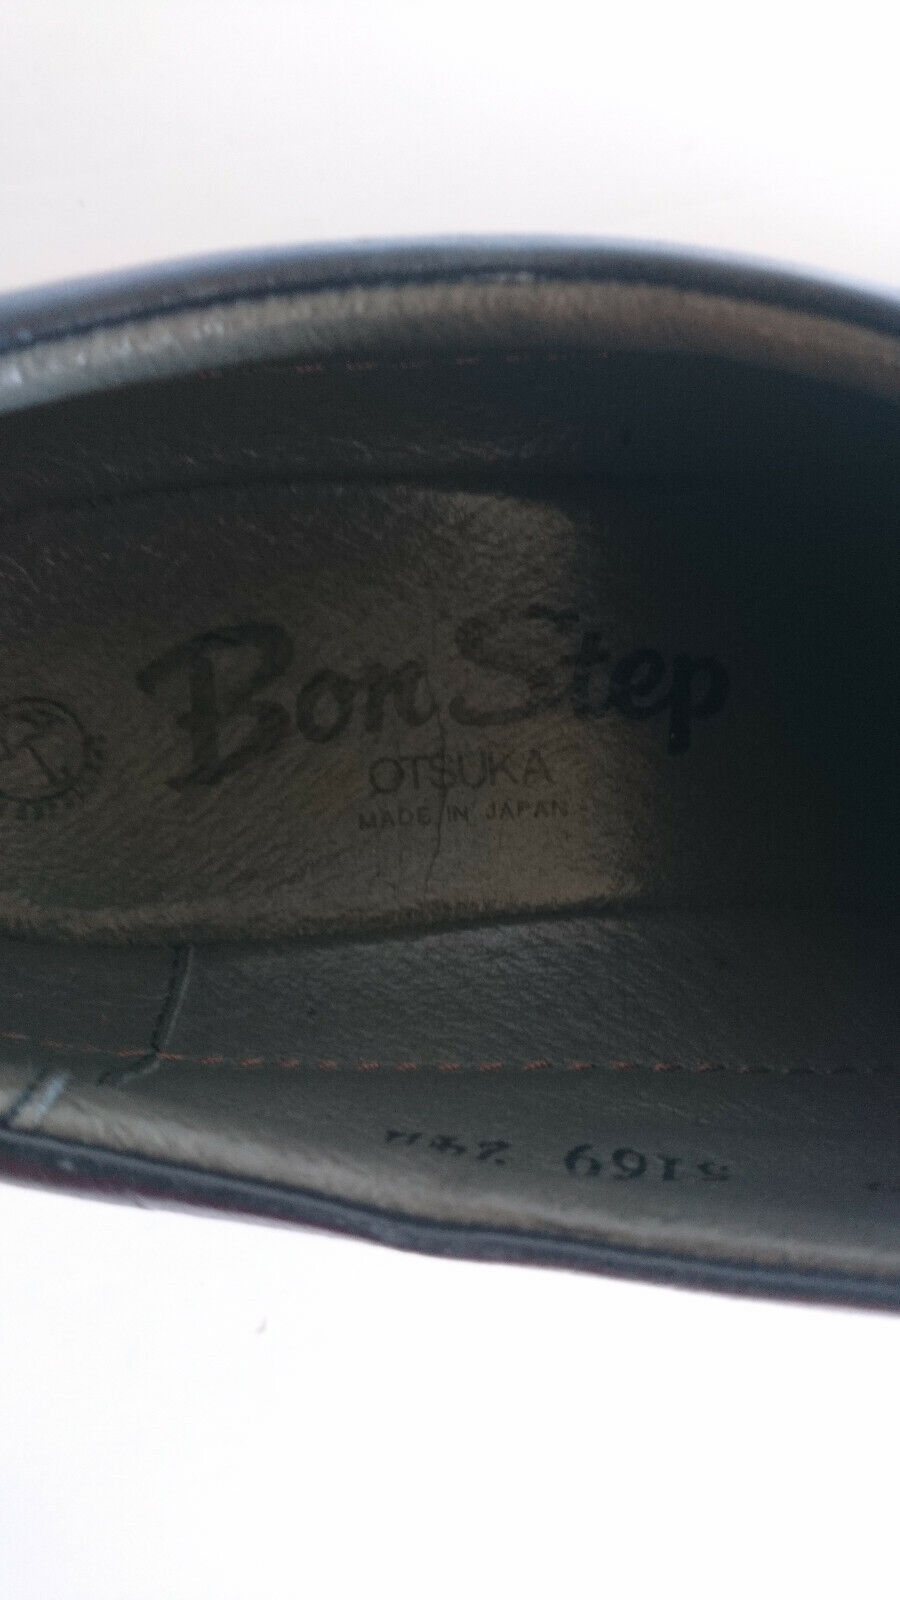 Bon Step OTSUKA Black Dress Shoes Oxfords Size 24 1/2 EEE